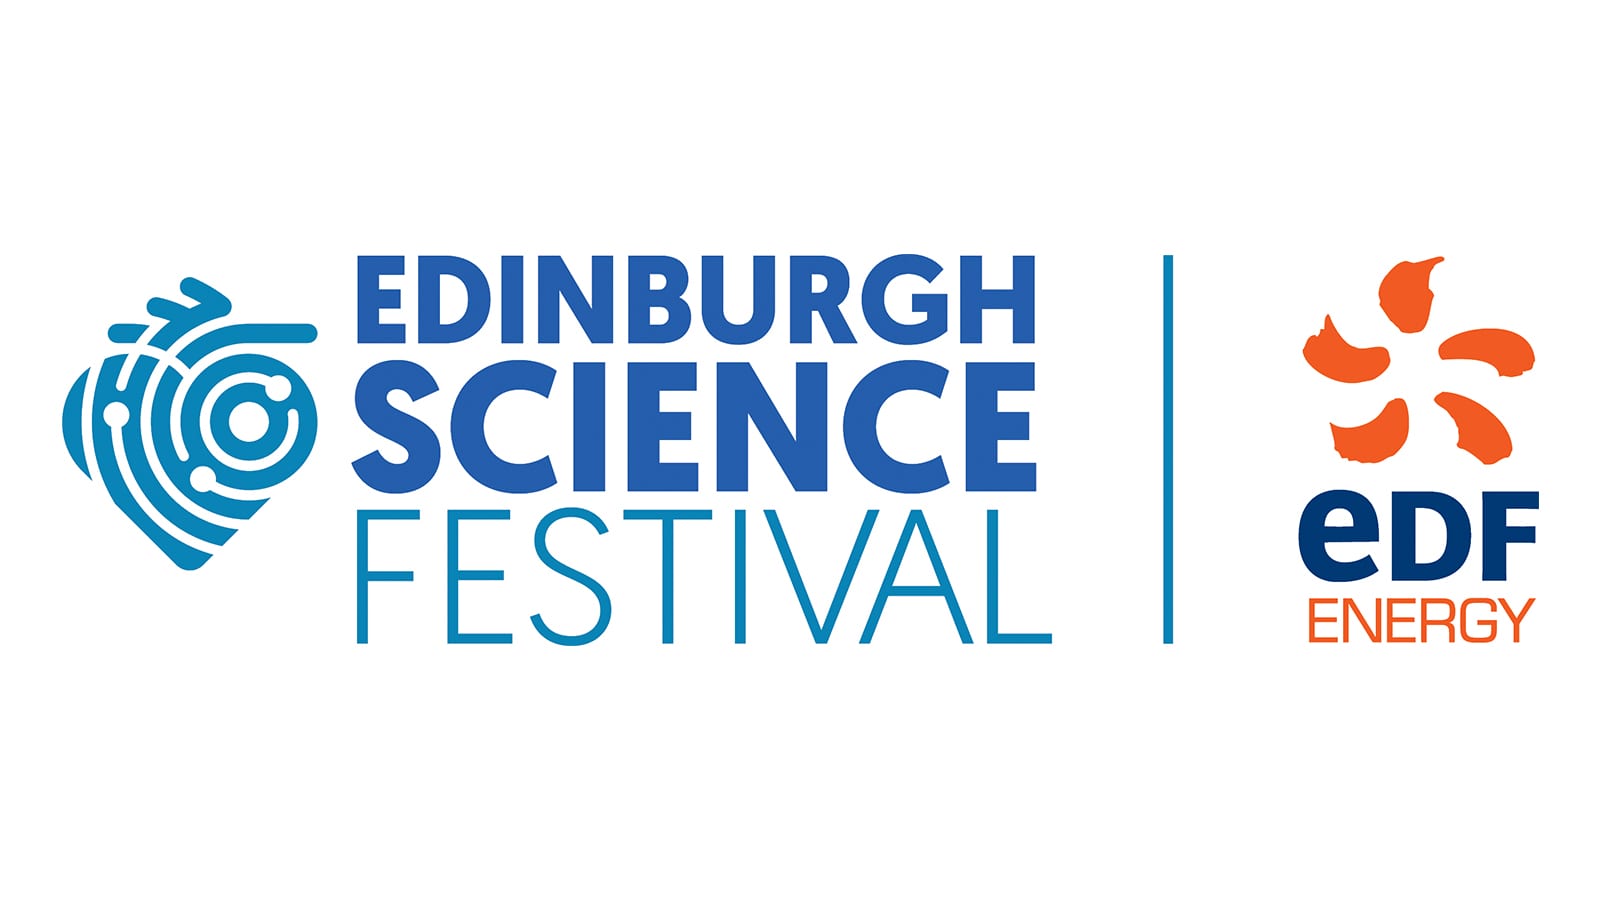 The Edinburgh Science Festival is back! Lothian Buses